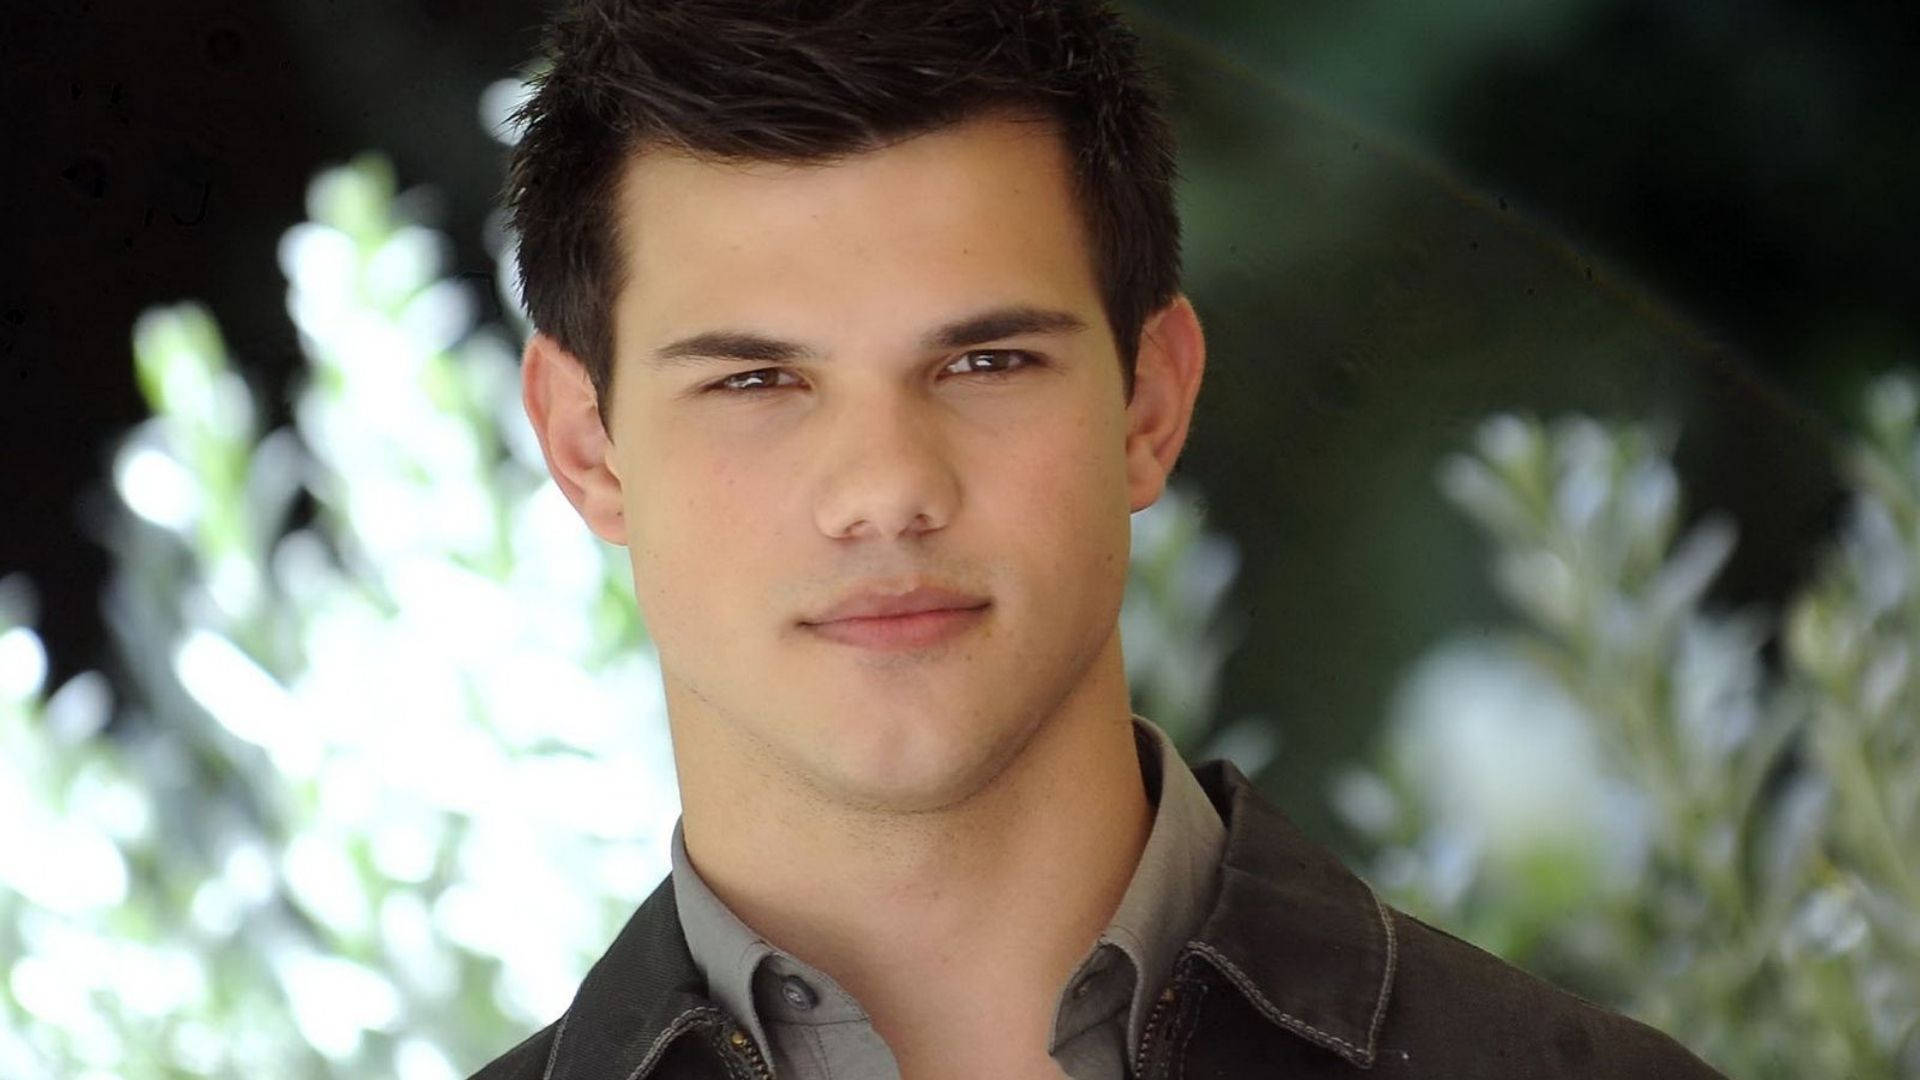 Hunk Actor Taylor Lautner Wallpaper